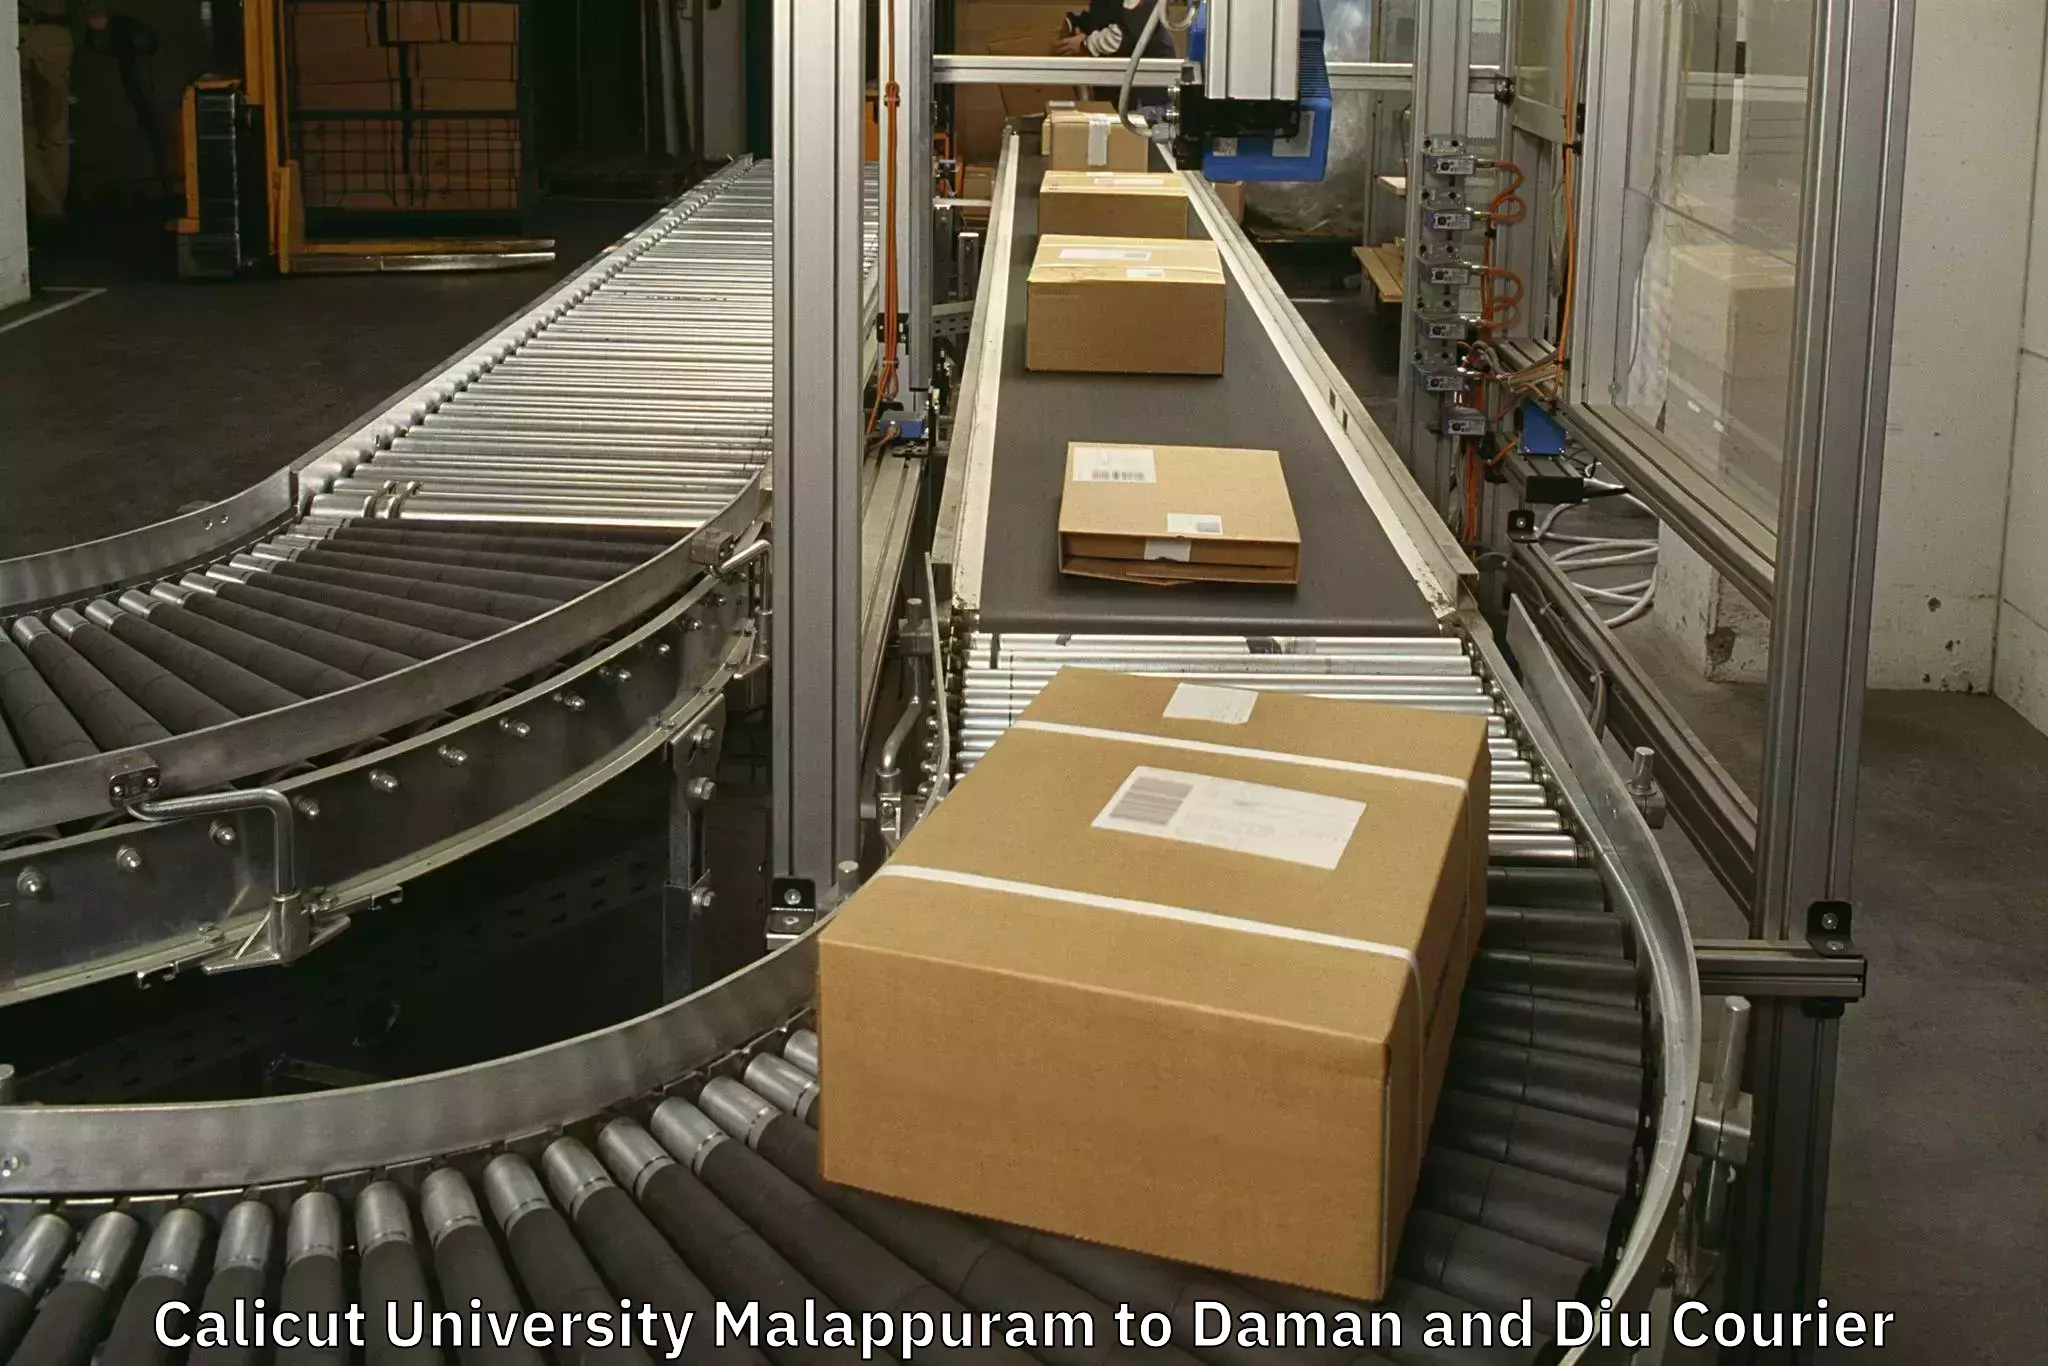 Baggage shipping service Calicut University Malappuram to Daman and Diu